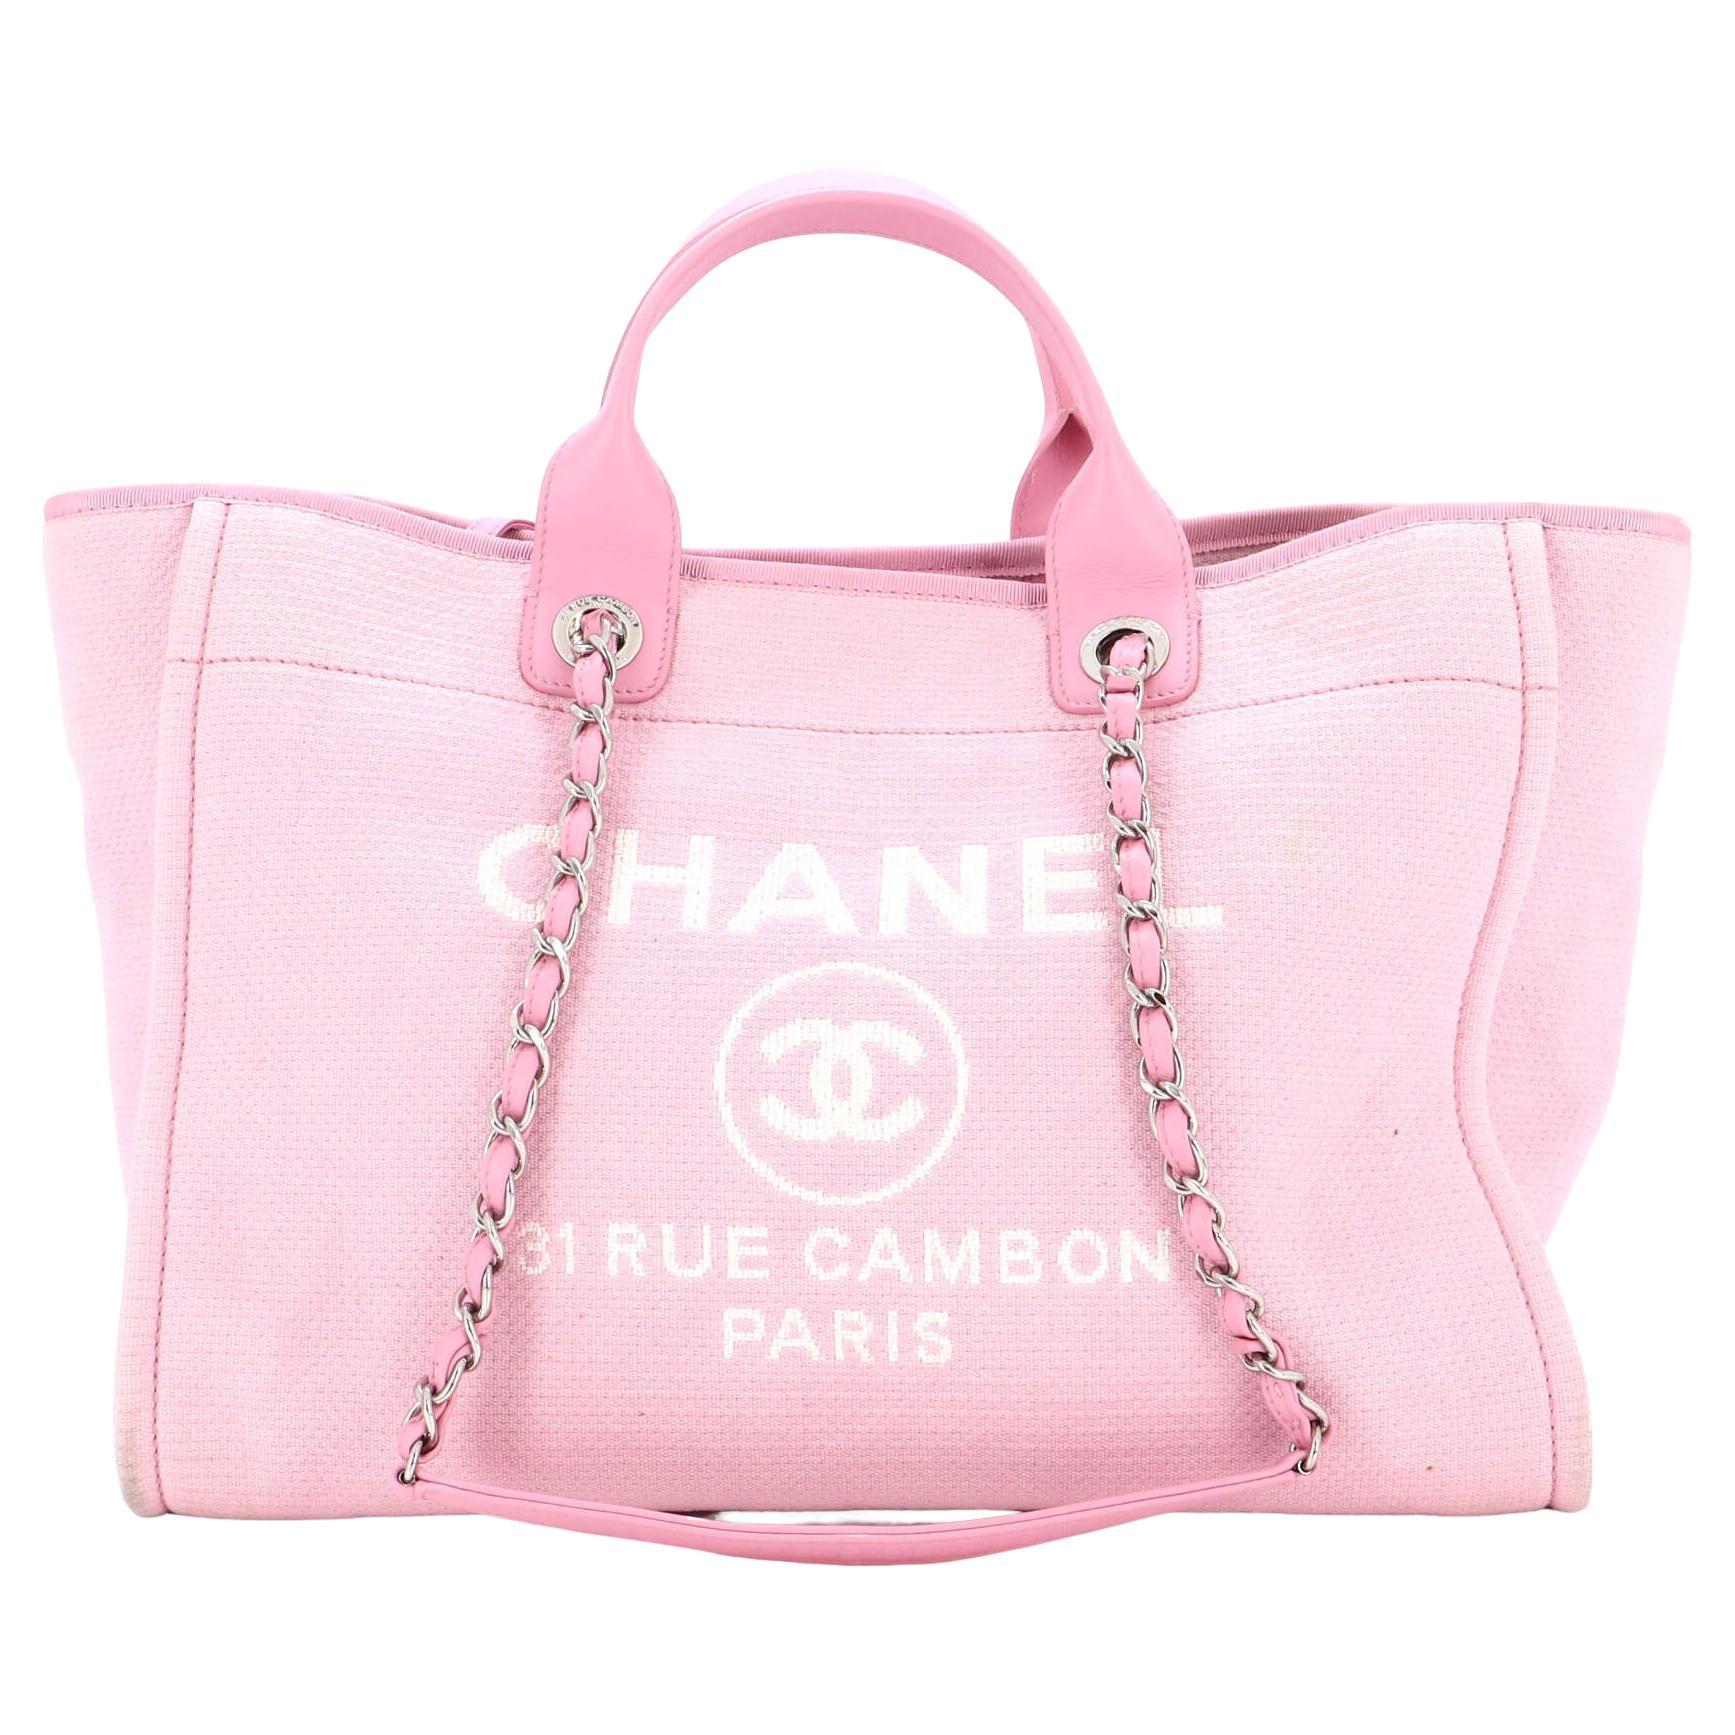 Taupe Chanel Bag - 18 For Sale on 1stDibs